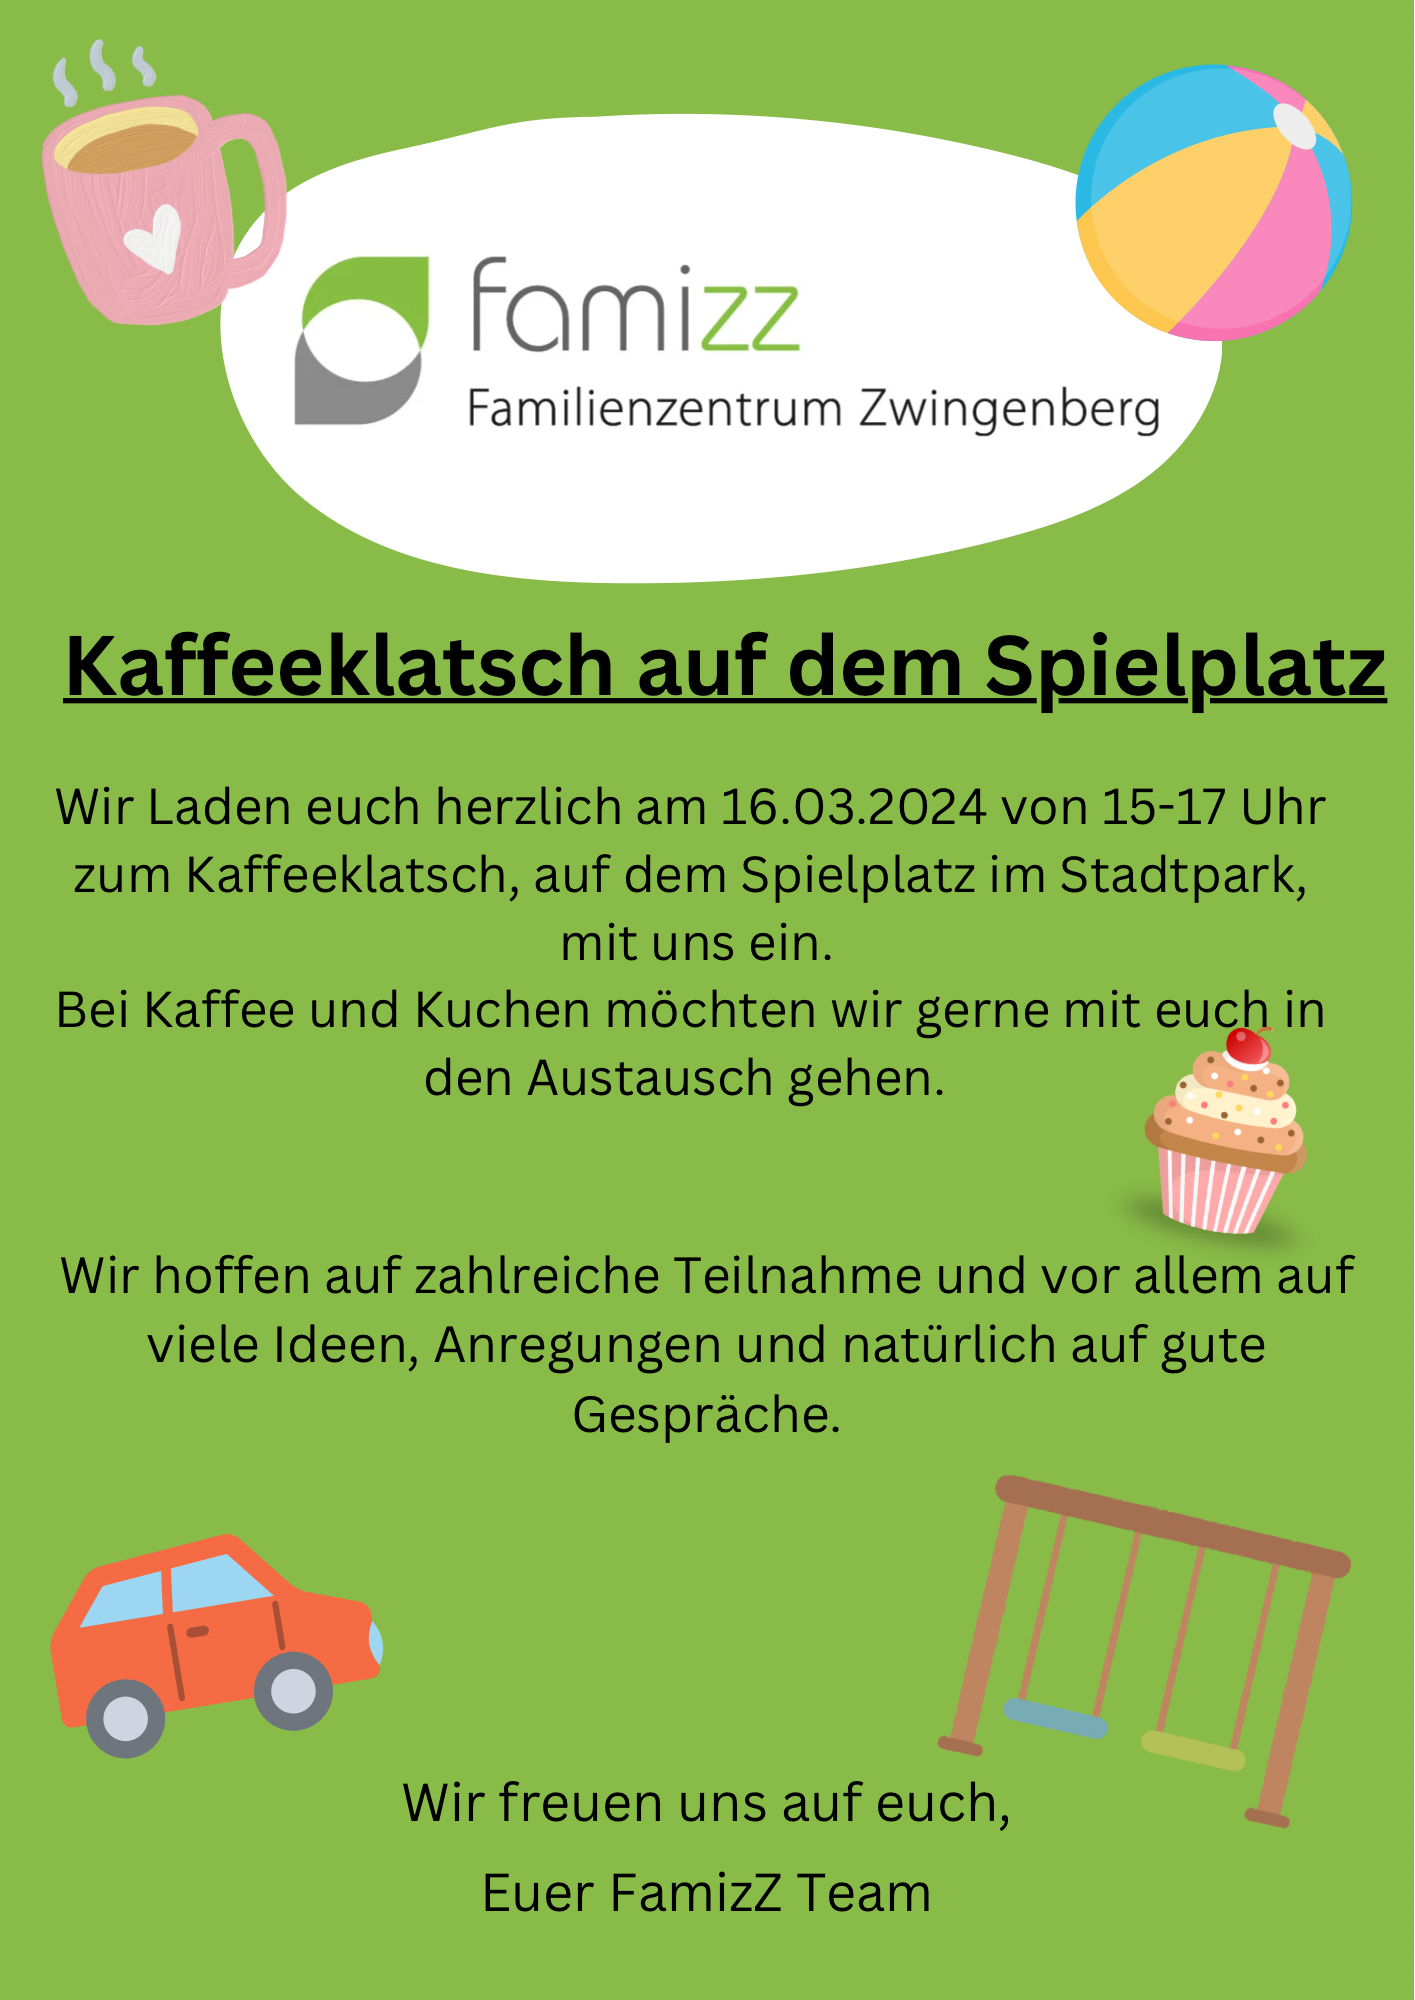 famizz - Familienzentrum Zwingenberg